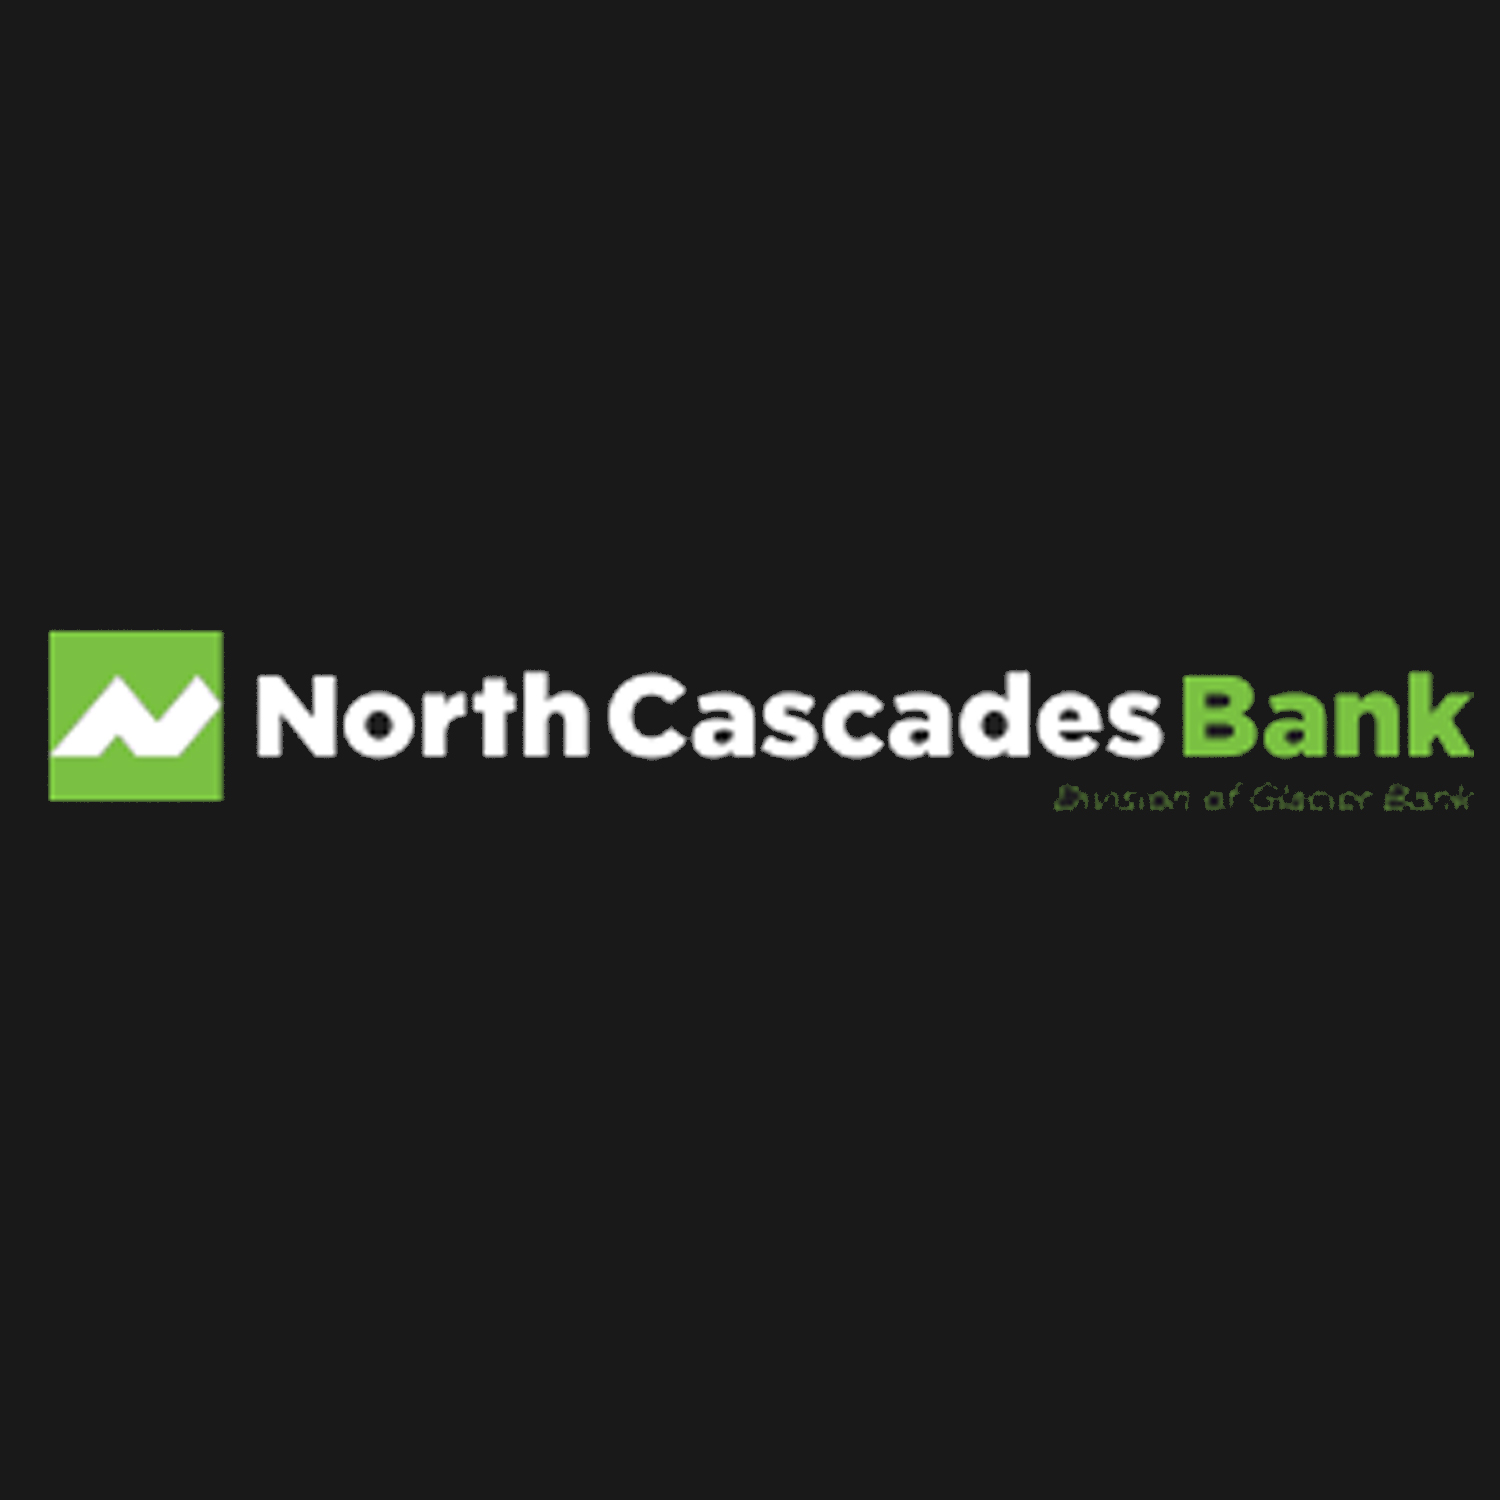 northcascadebank.logo.square.jpg